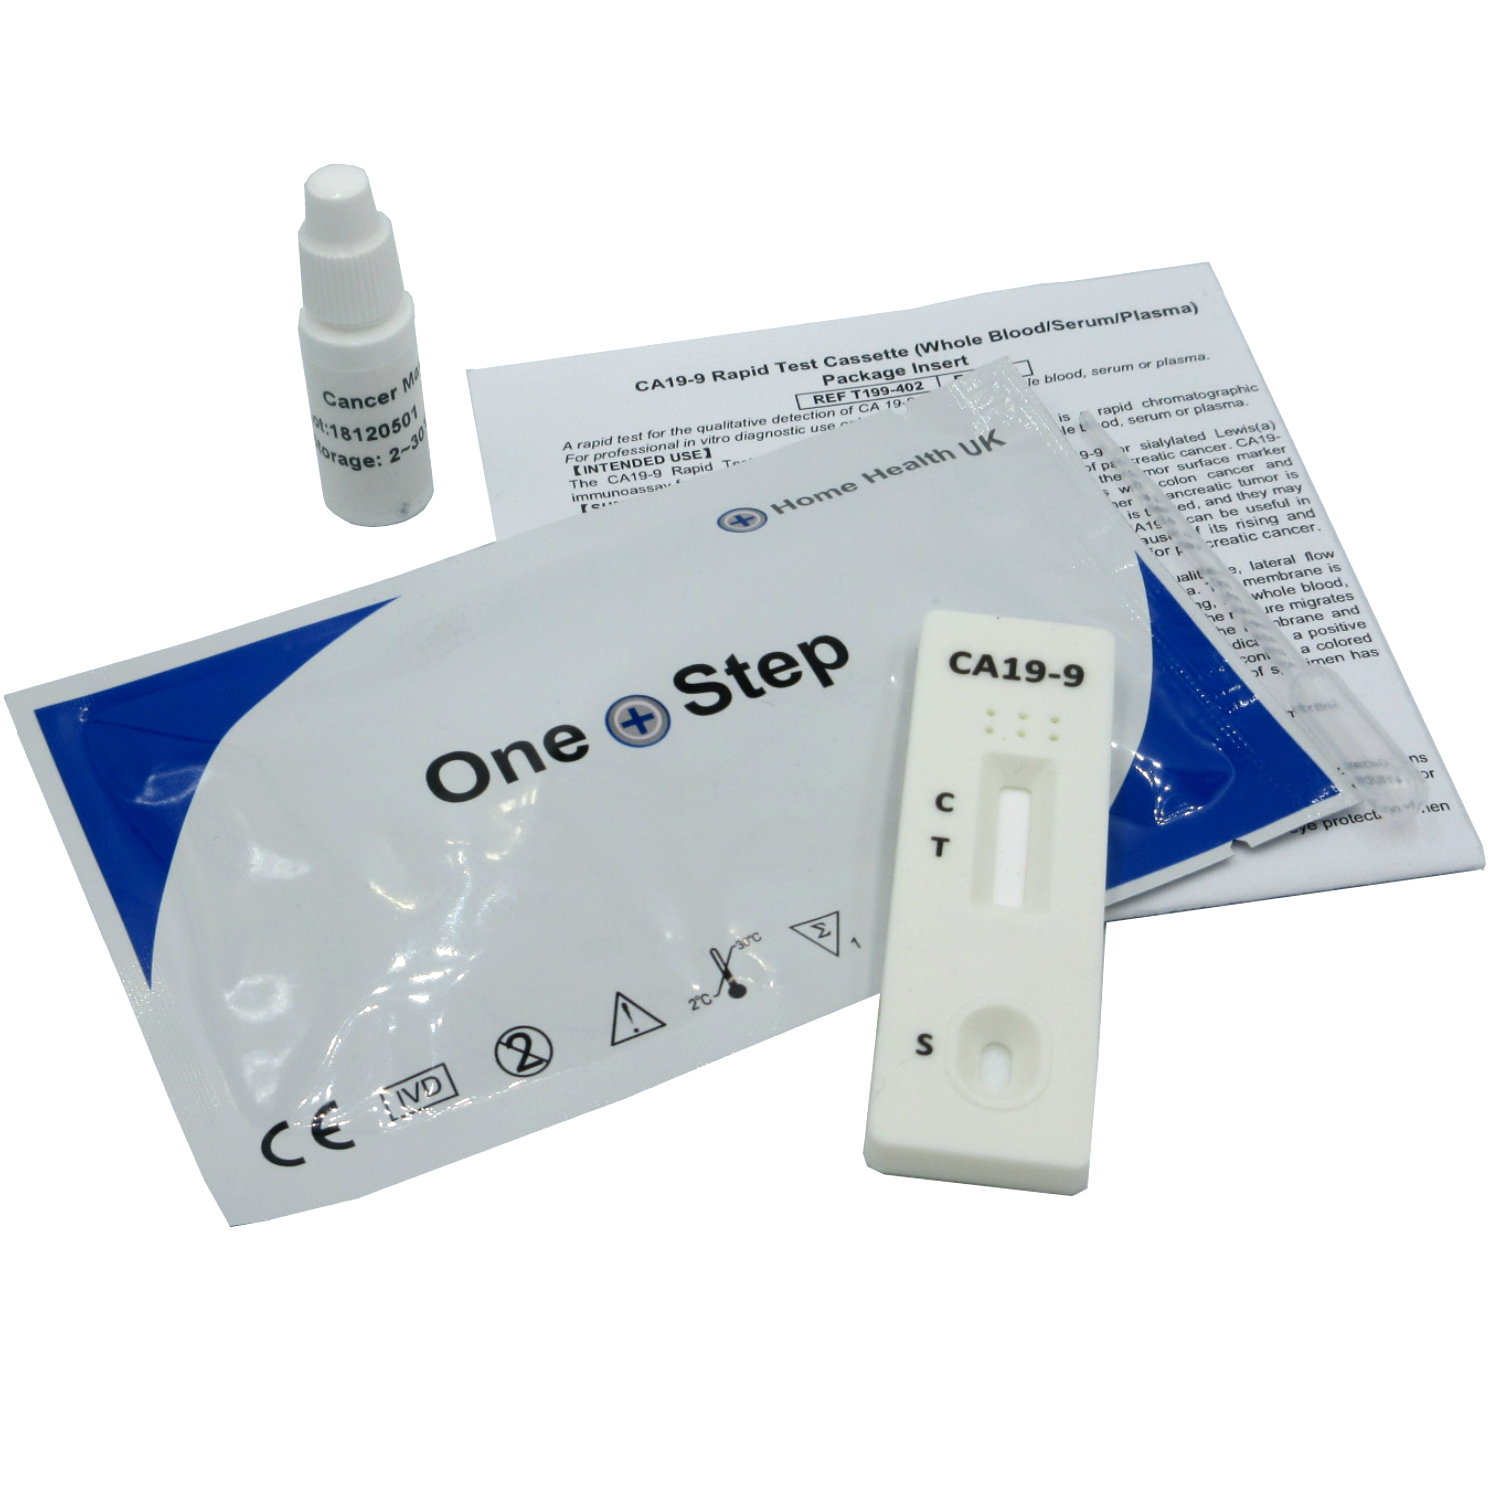 Маркер са 19. CA 19-9. IV Blood Test Kit. Лигоплекс CA.